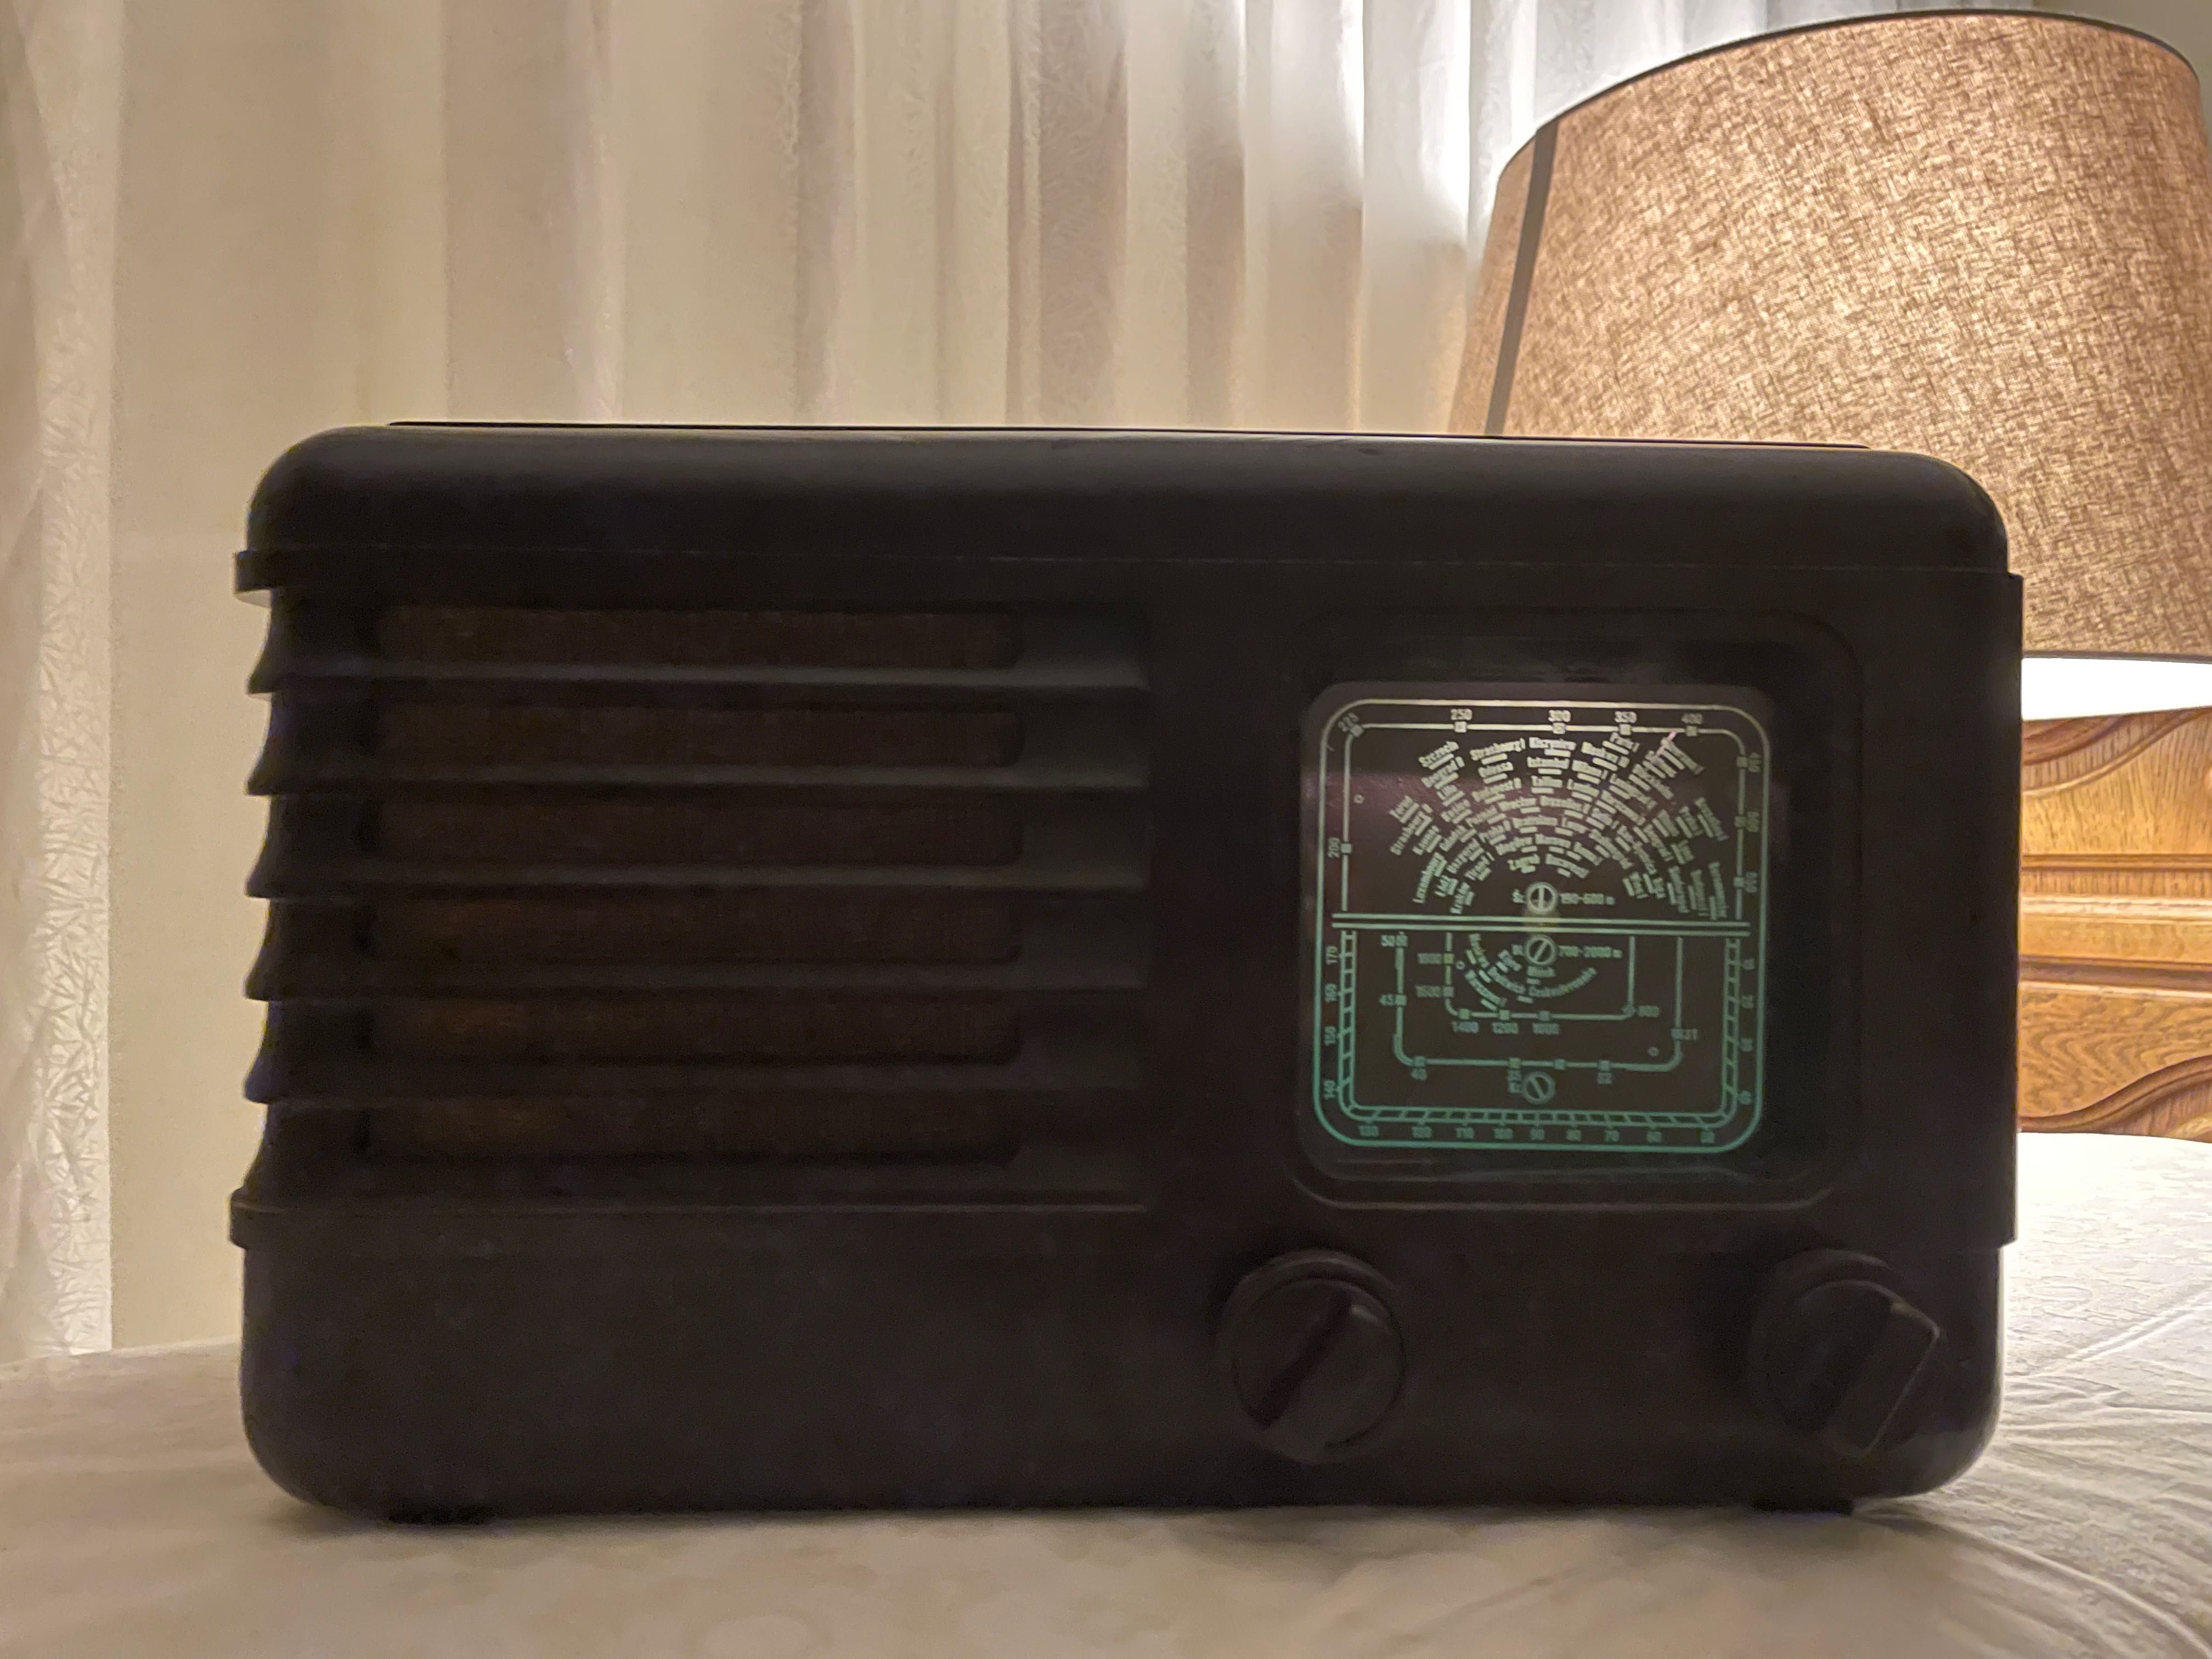 Stare radio marki Pionier.